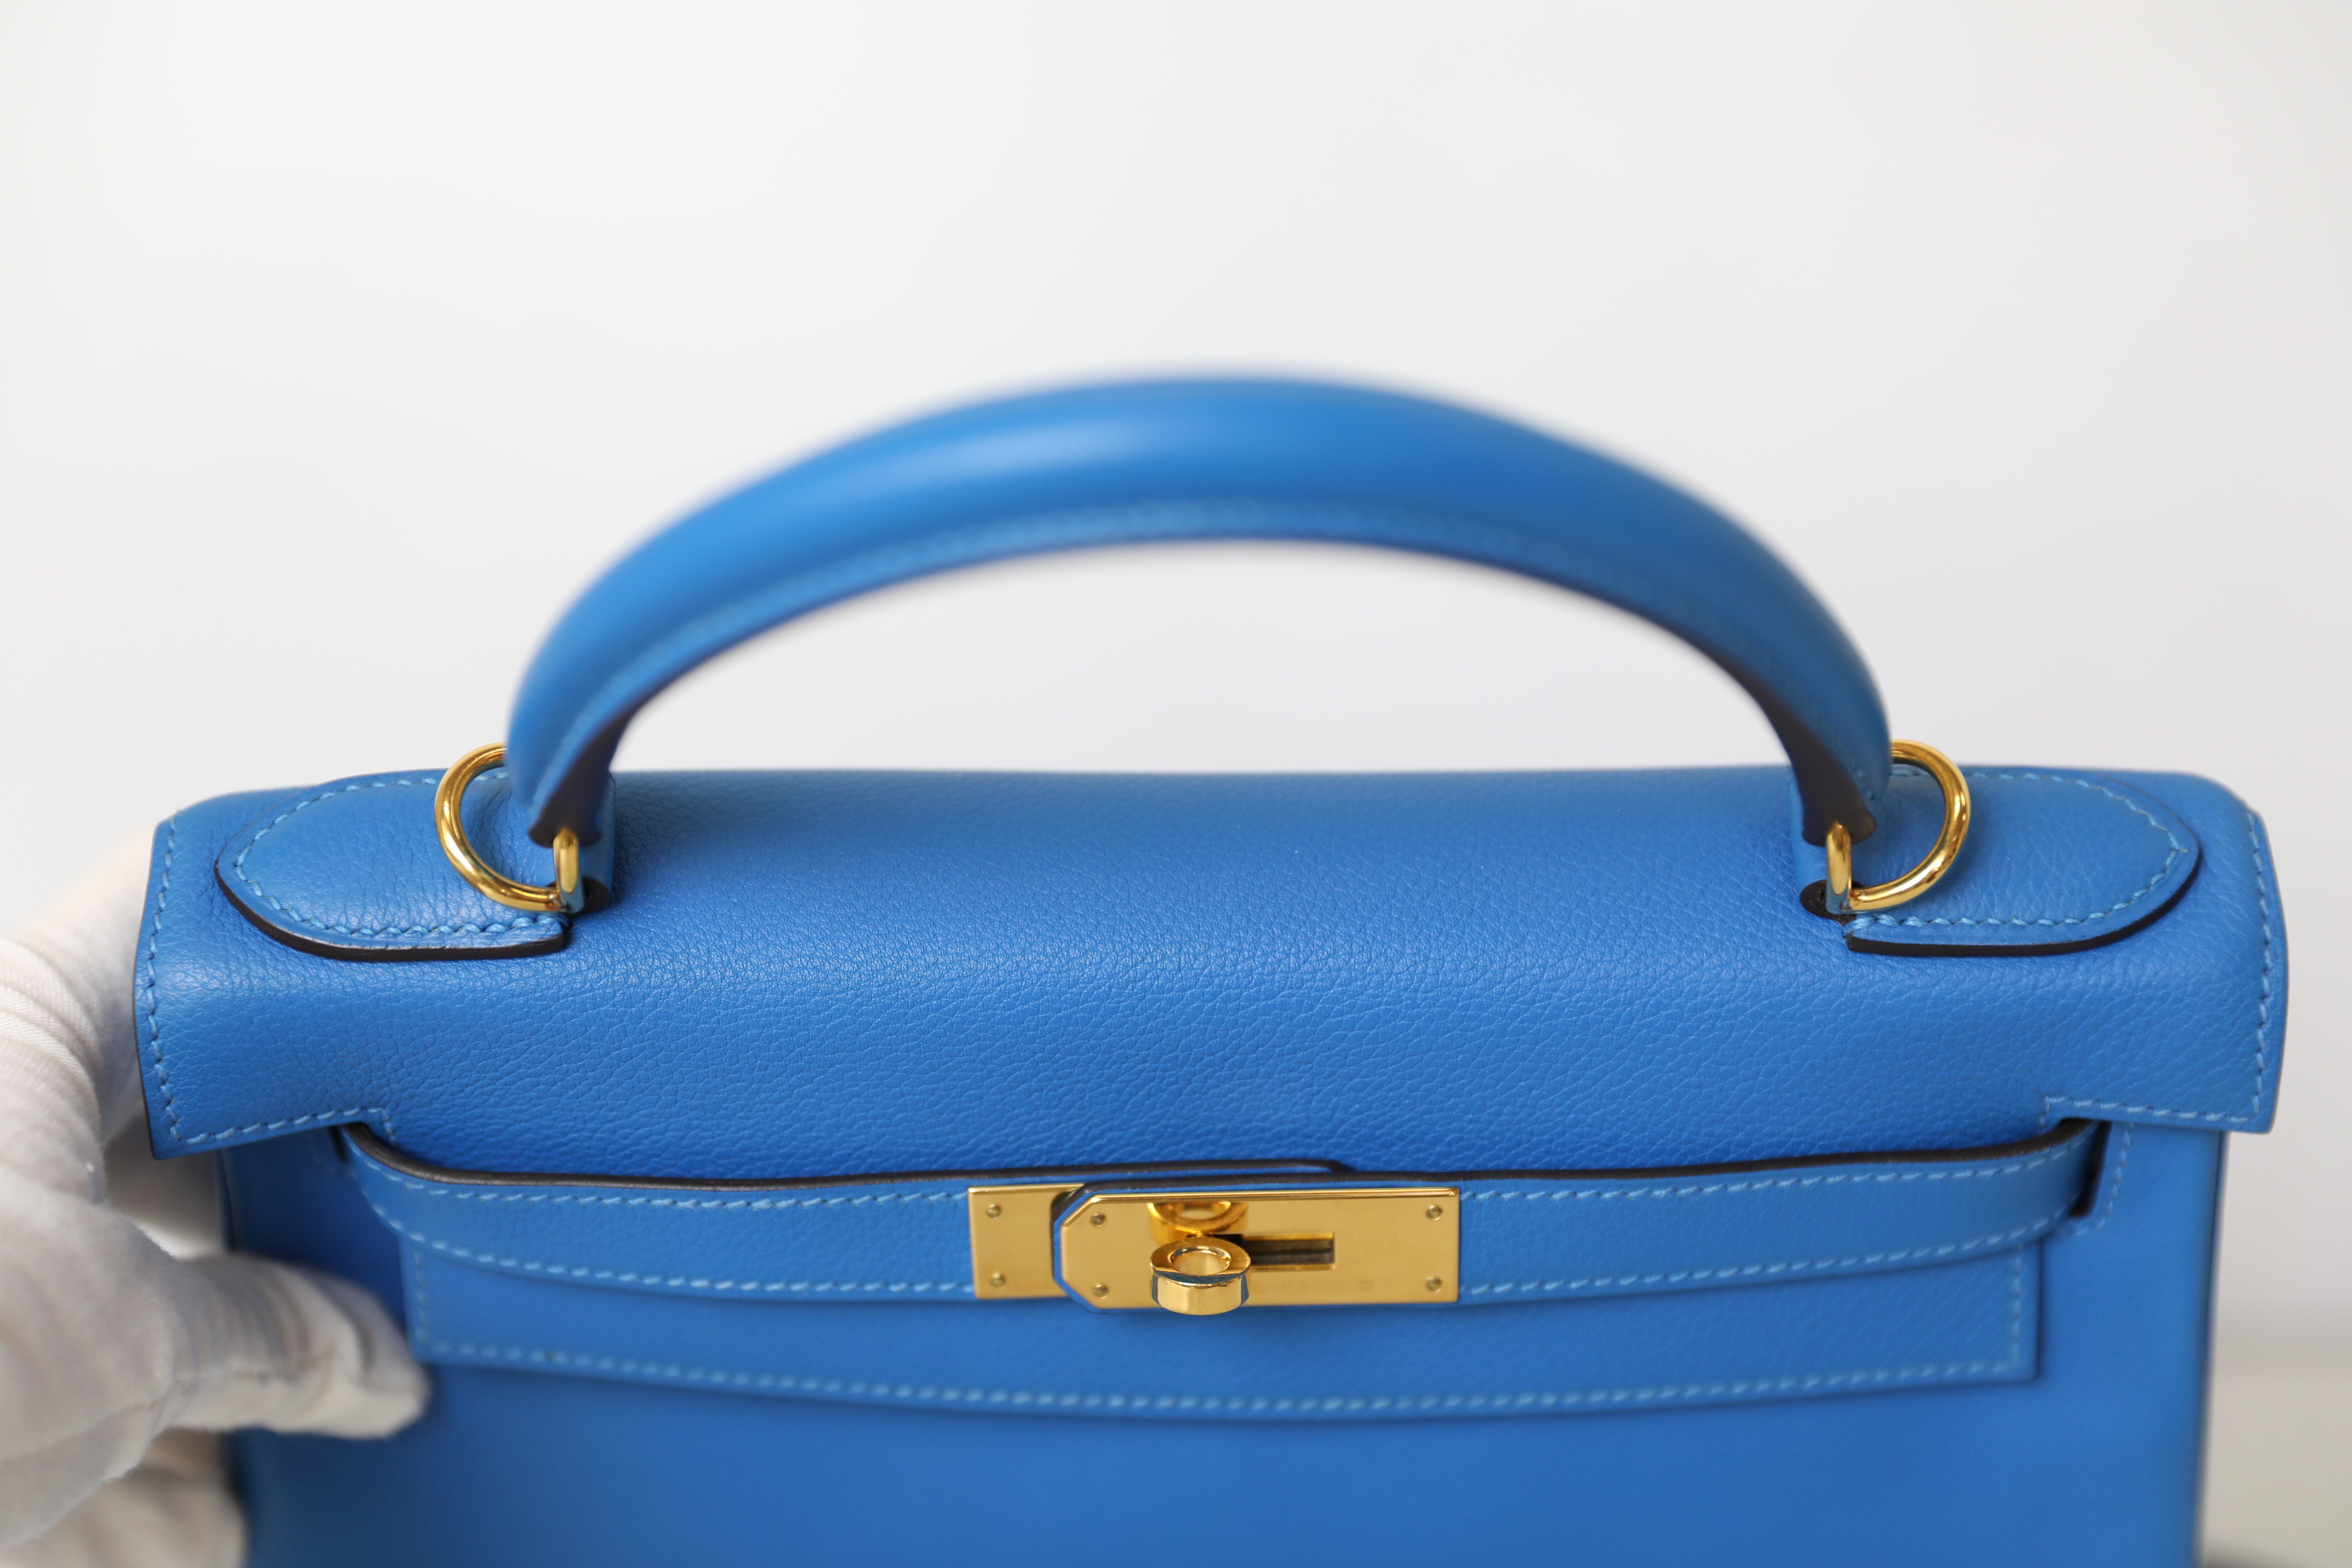 Sold at Auction: Hermès 28cm Blue Glacier Evercolor Leather Retourne Kelly  Bag with Gold Hardware